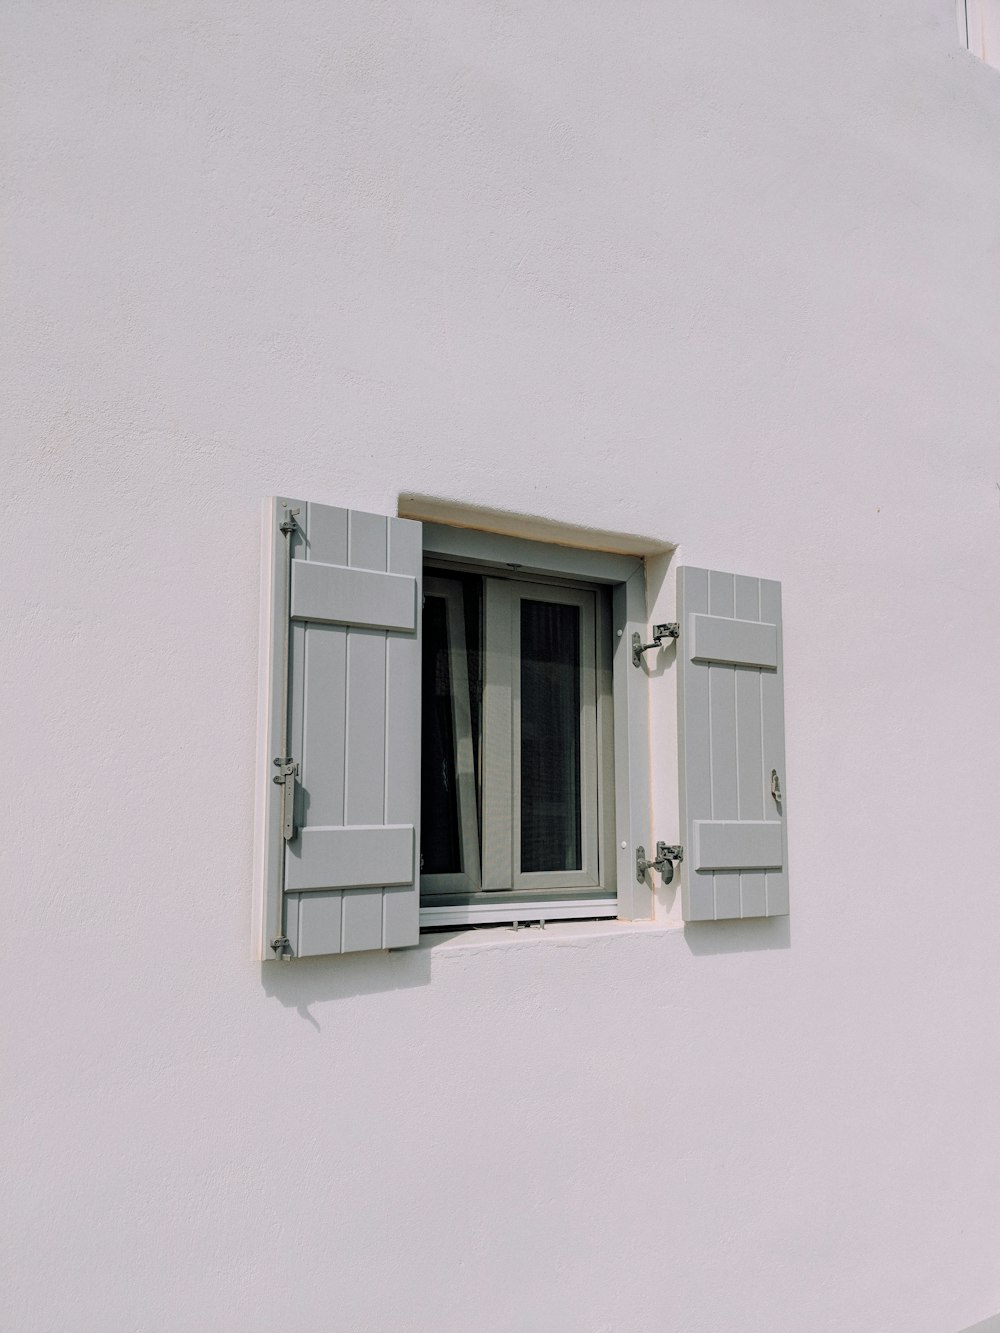 gray wooden casement window panel in white concrete building